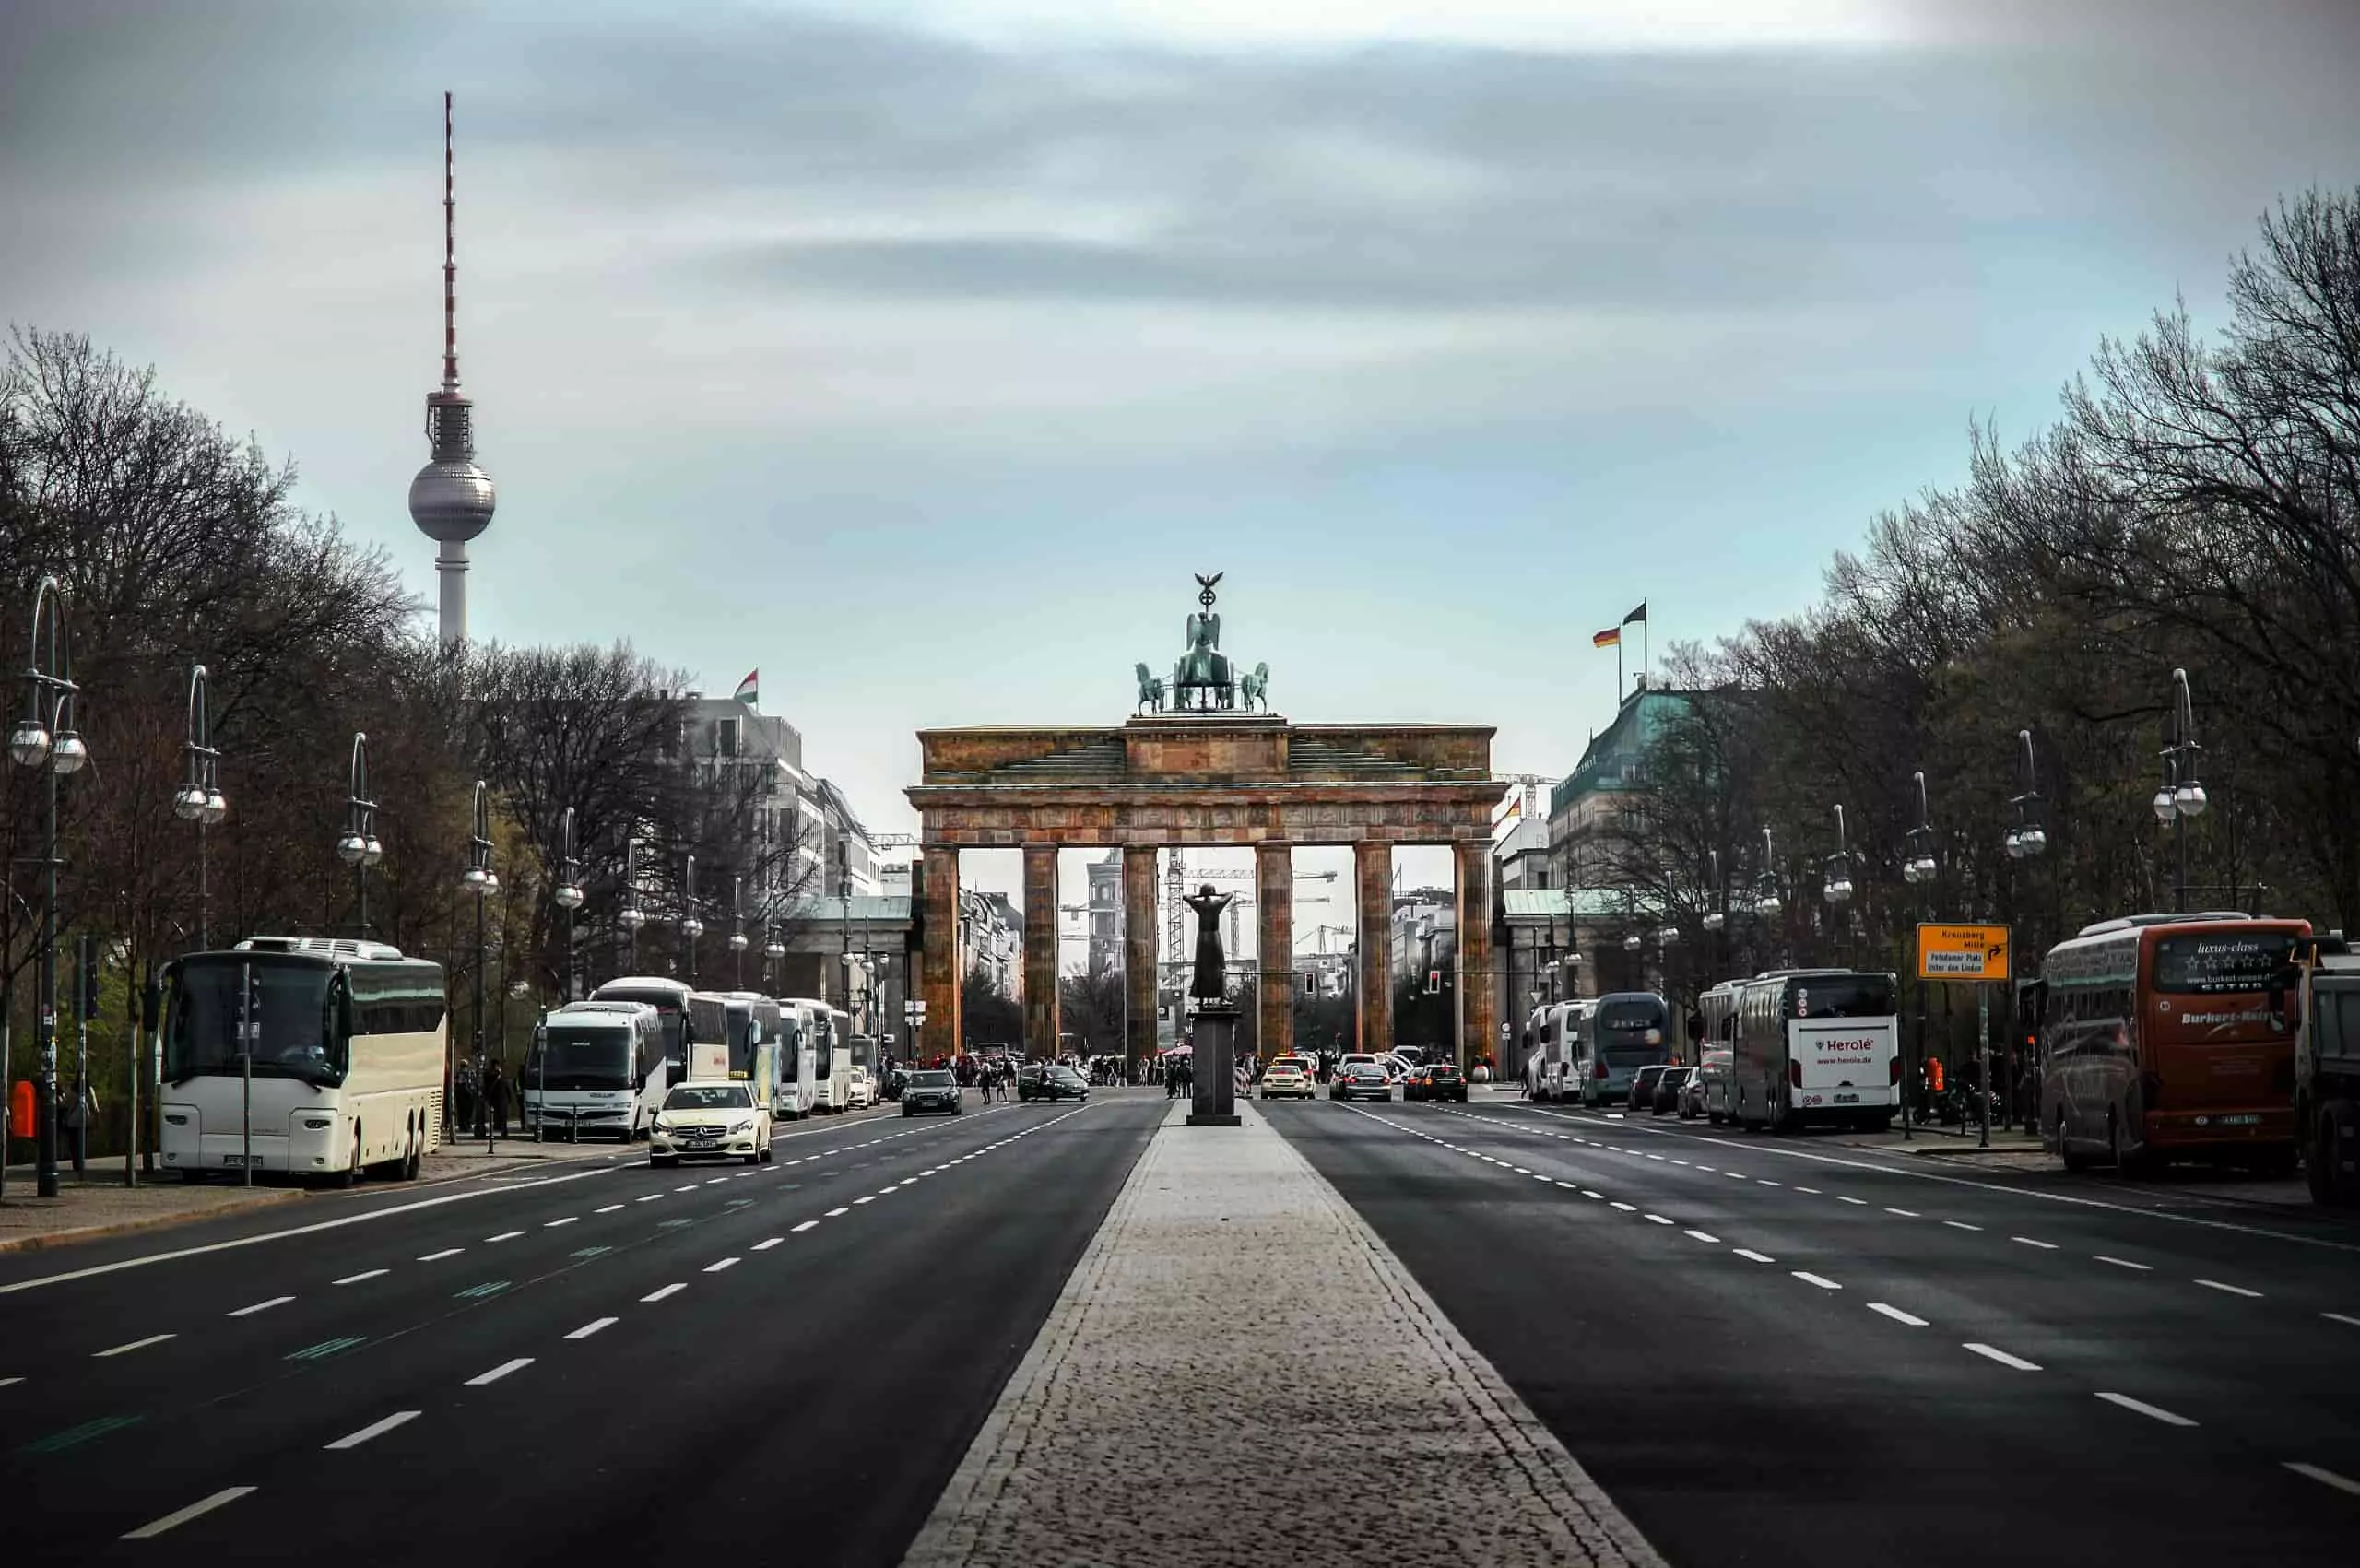 The brandenburg gate, Berlin.